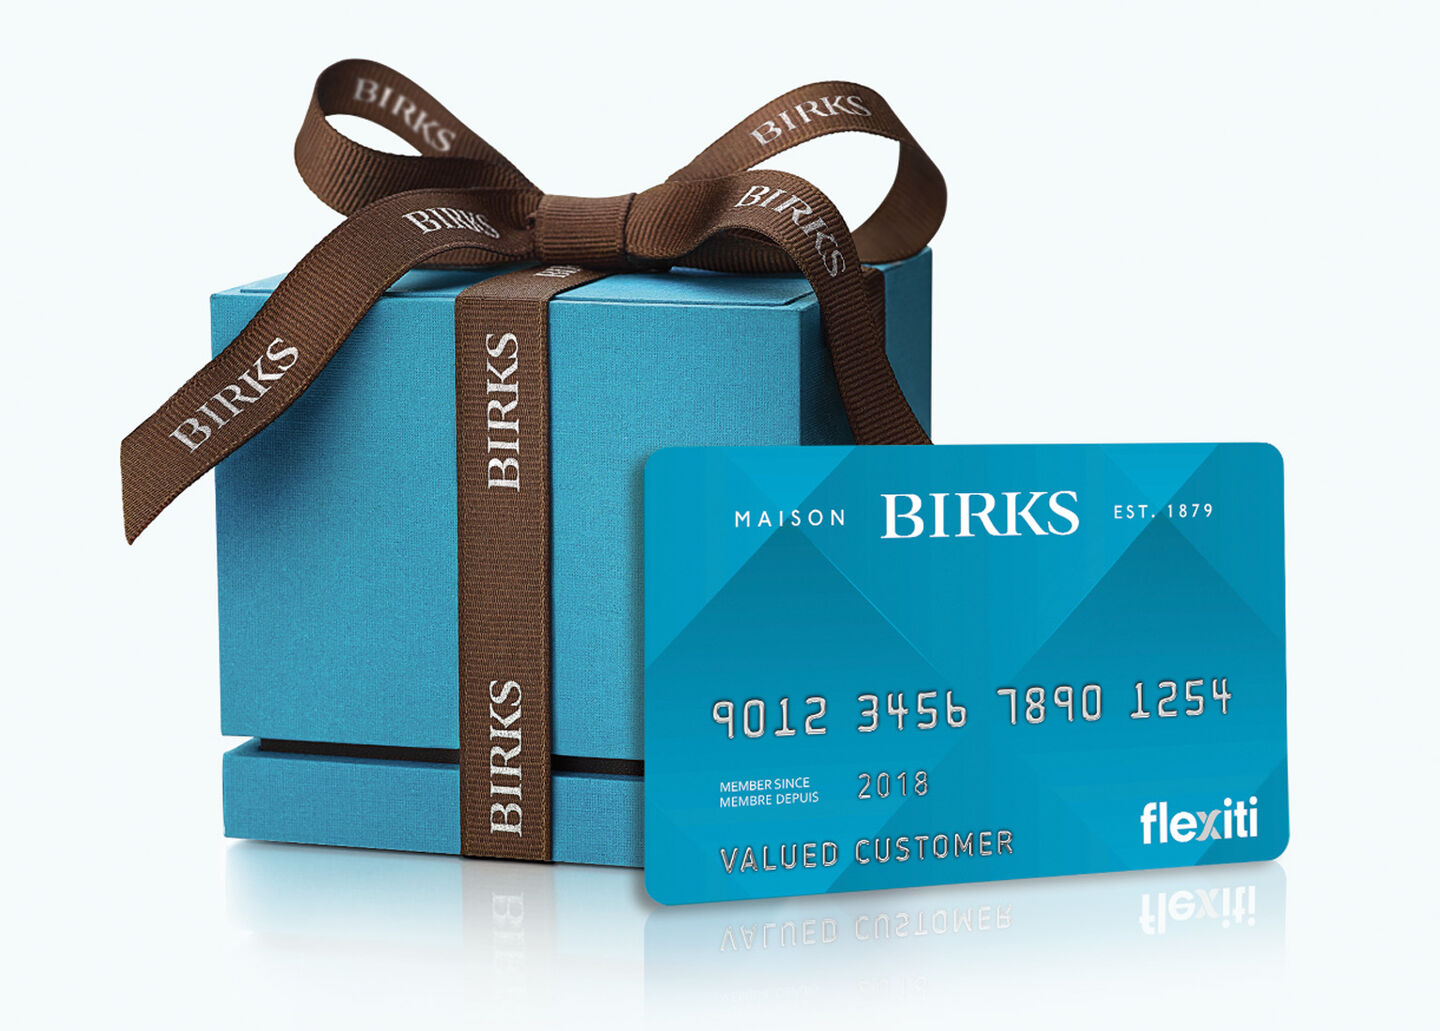 A Birks Blue Box with a Maison Birks Flexiti Card on a blue background.